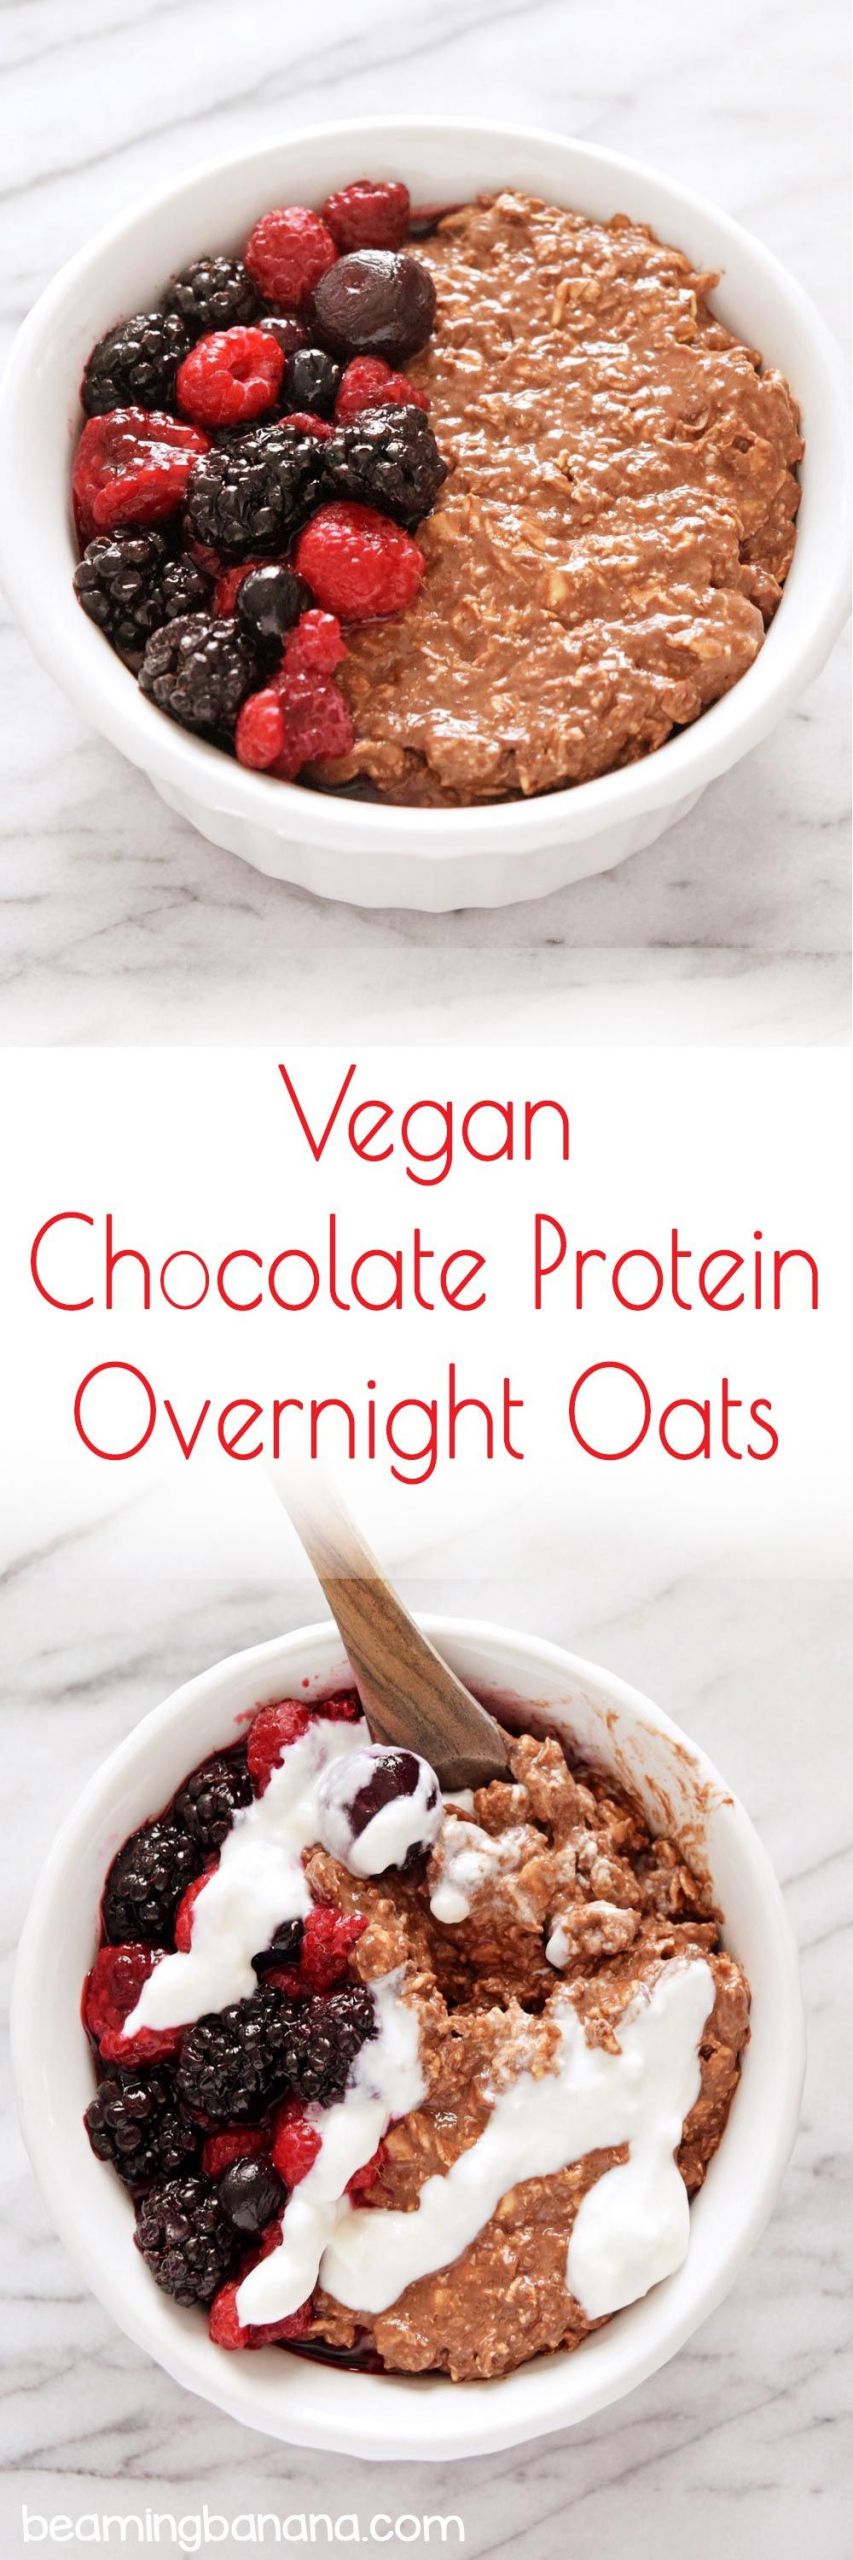 Vegan Protein Overnight Oats
 Vegan Chocolate Protein Overnight Oats